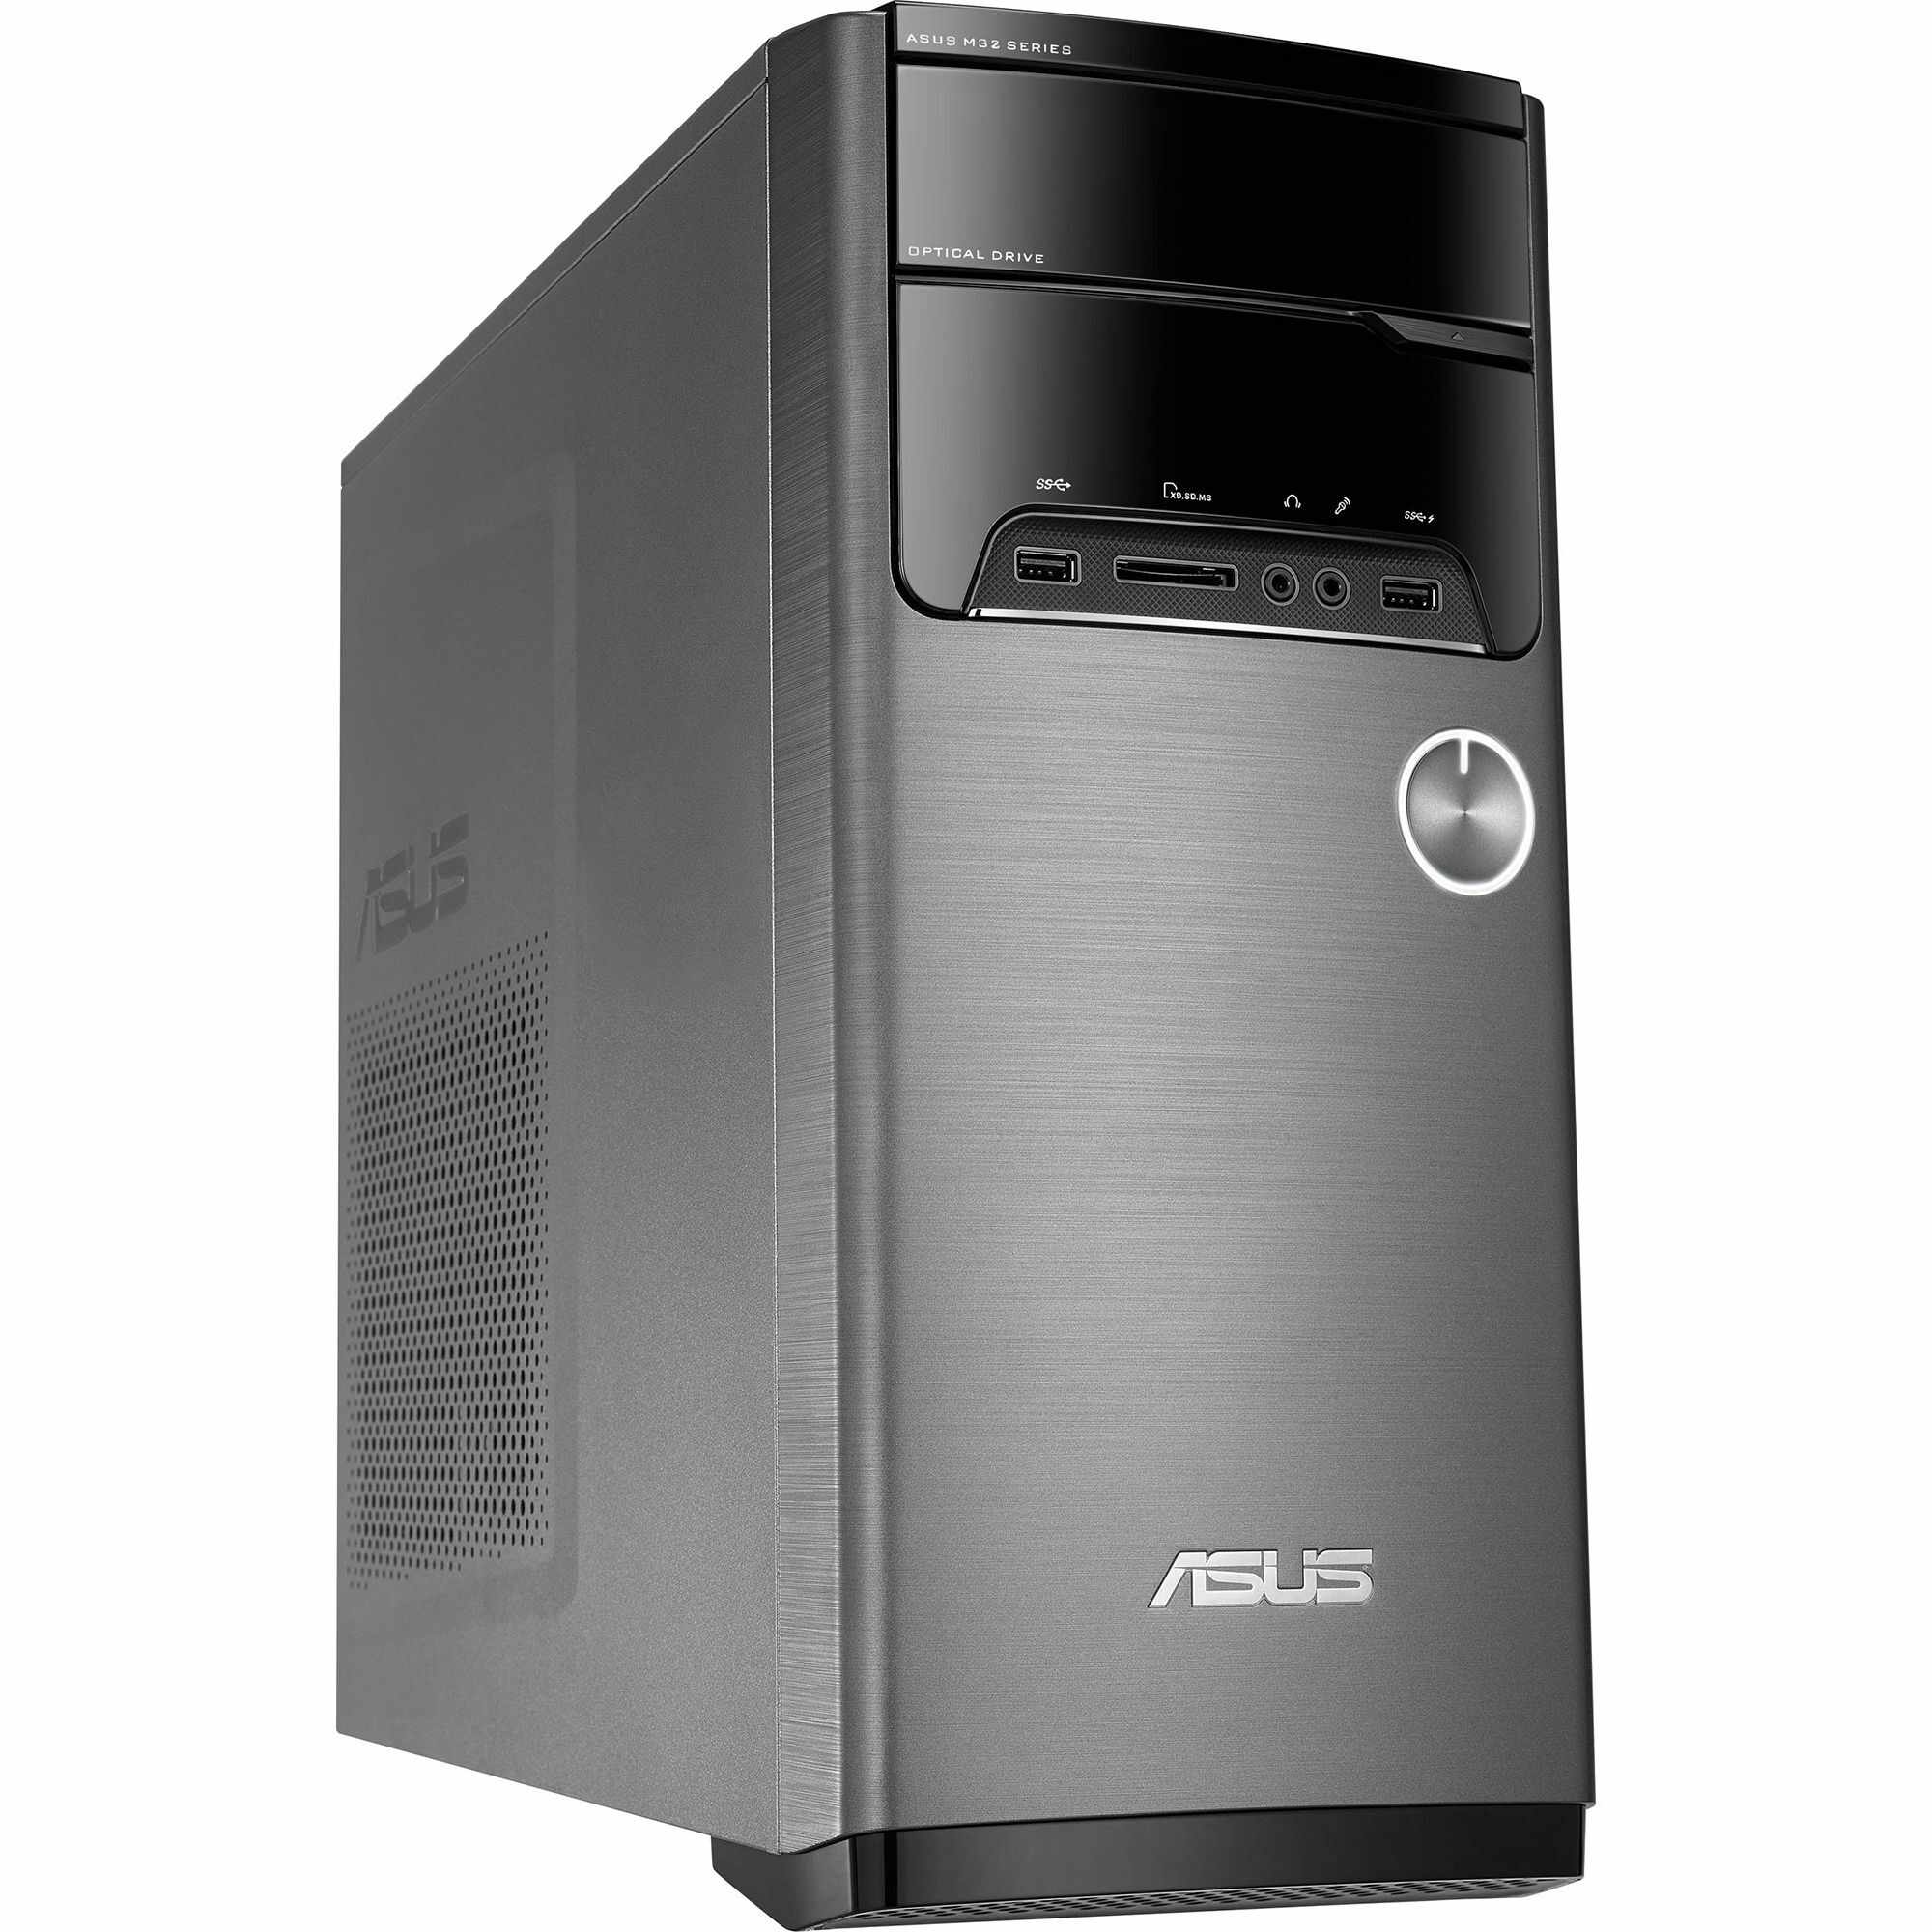 Sistem Desktop PC Asus M32AD-RO051D, Intel Core i5, Memorie 8GB, HDD 2TB, nVidia GeForce, Free DOS